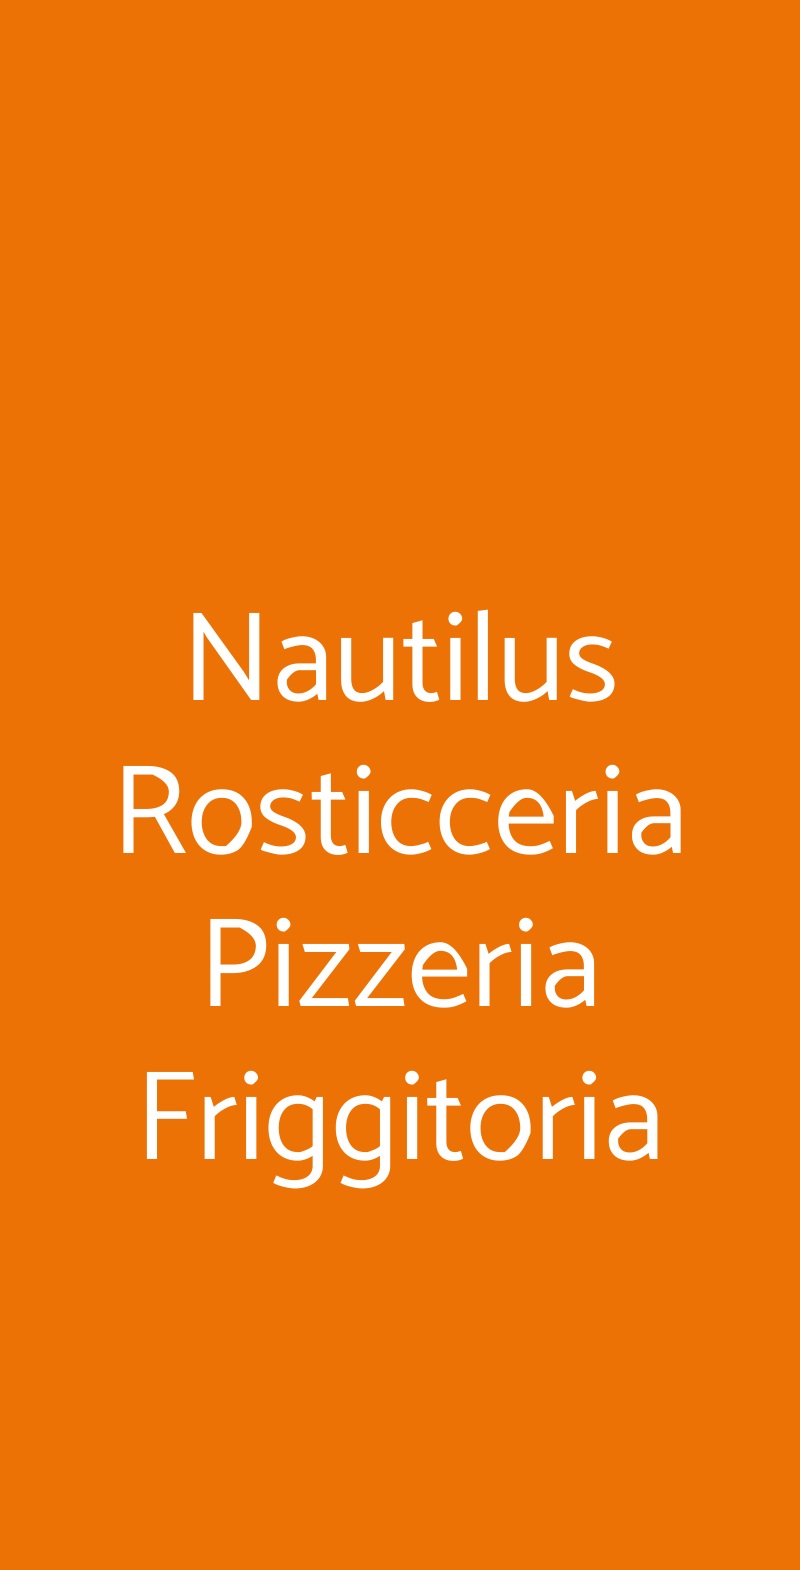 Nautilus Rosticceria Pizzeria Friggitoria Modugno menù 1 pagina